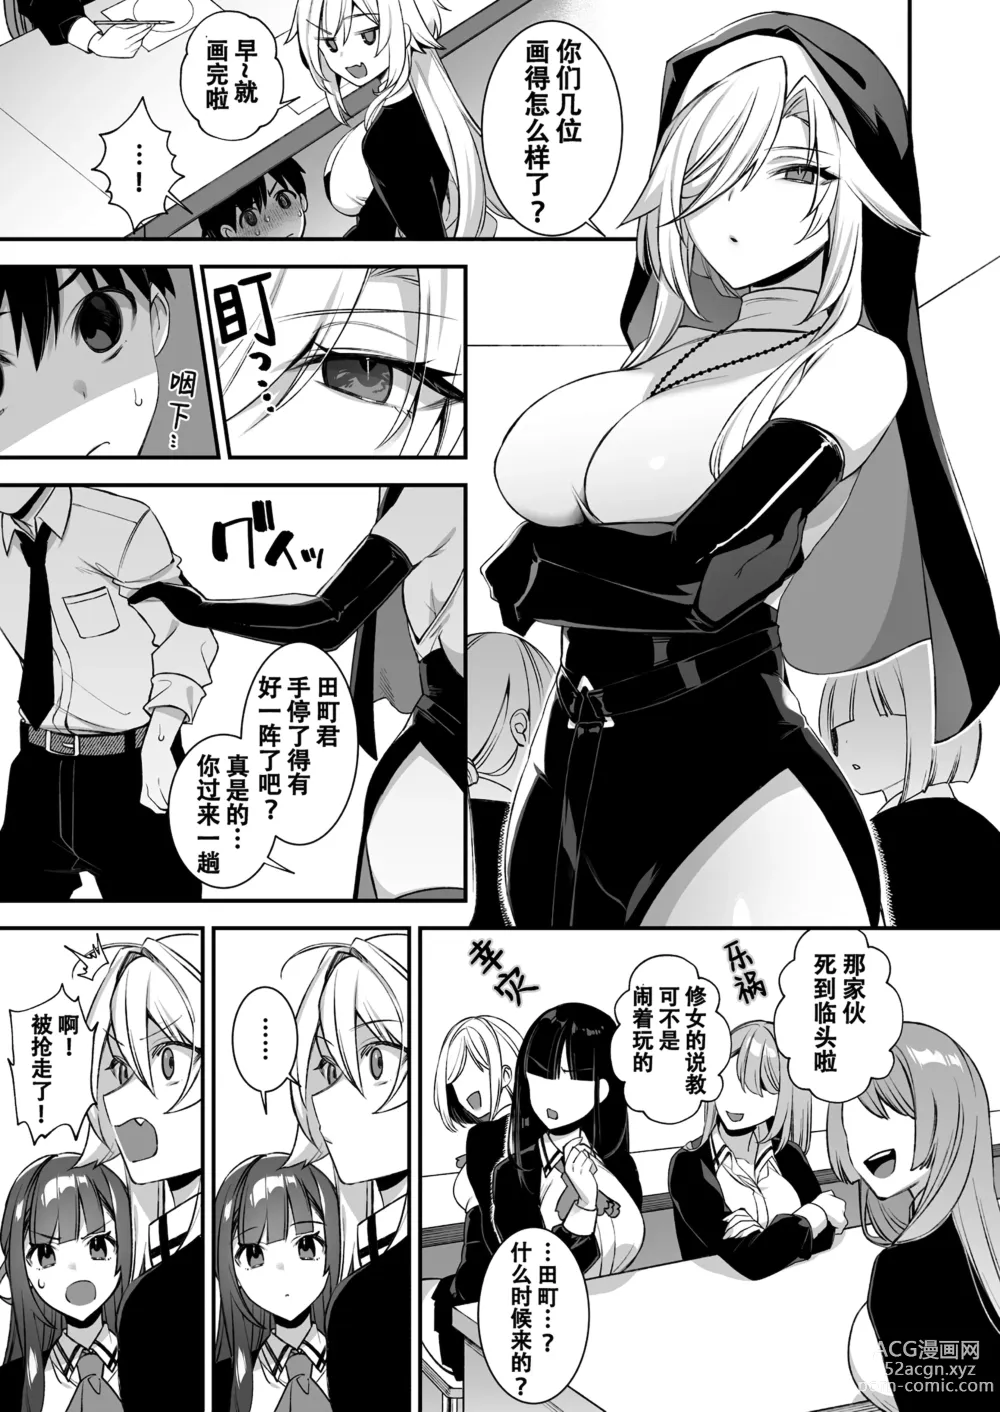 Page 26 of manga Hypnosis 3 (uncensored)